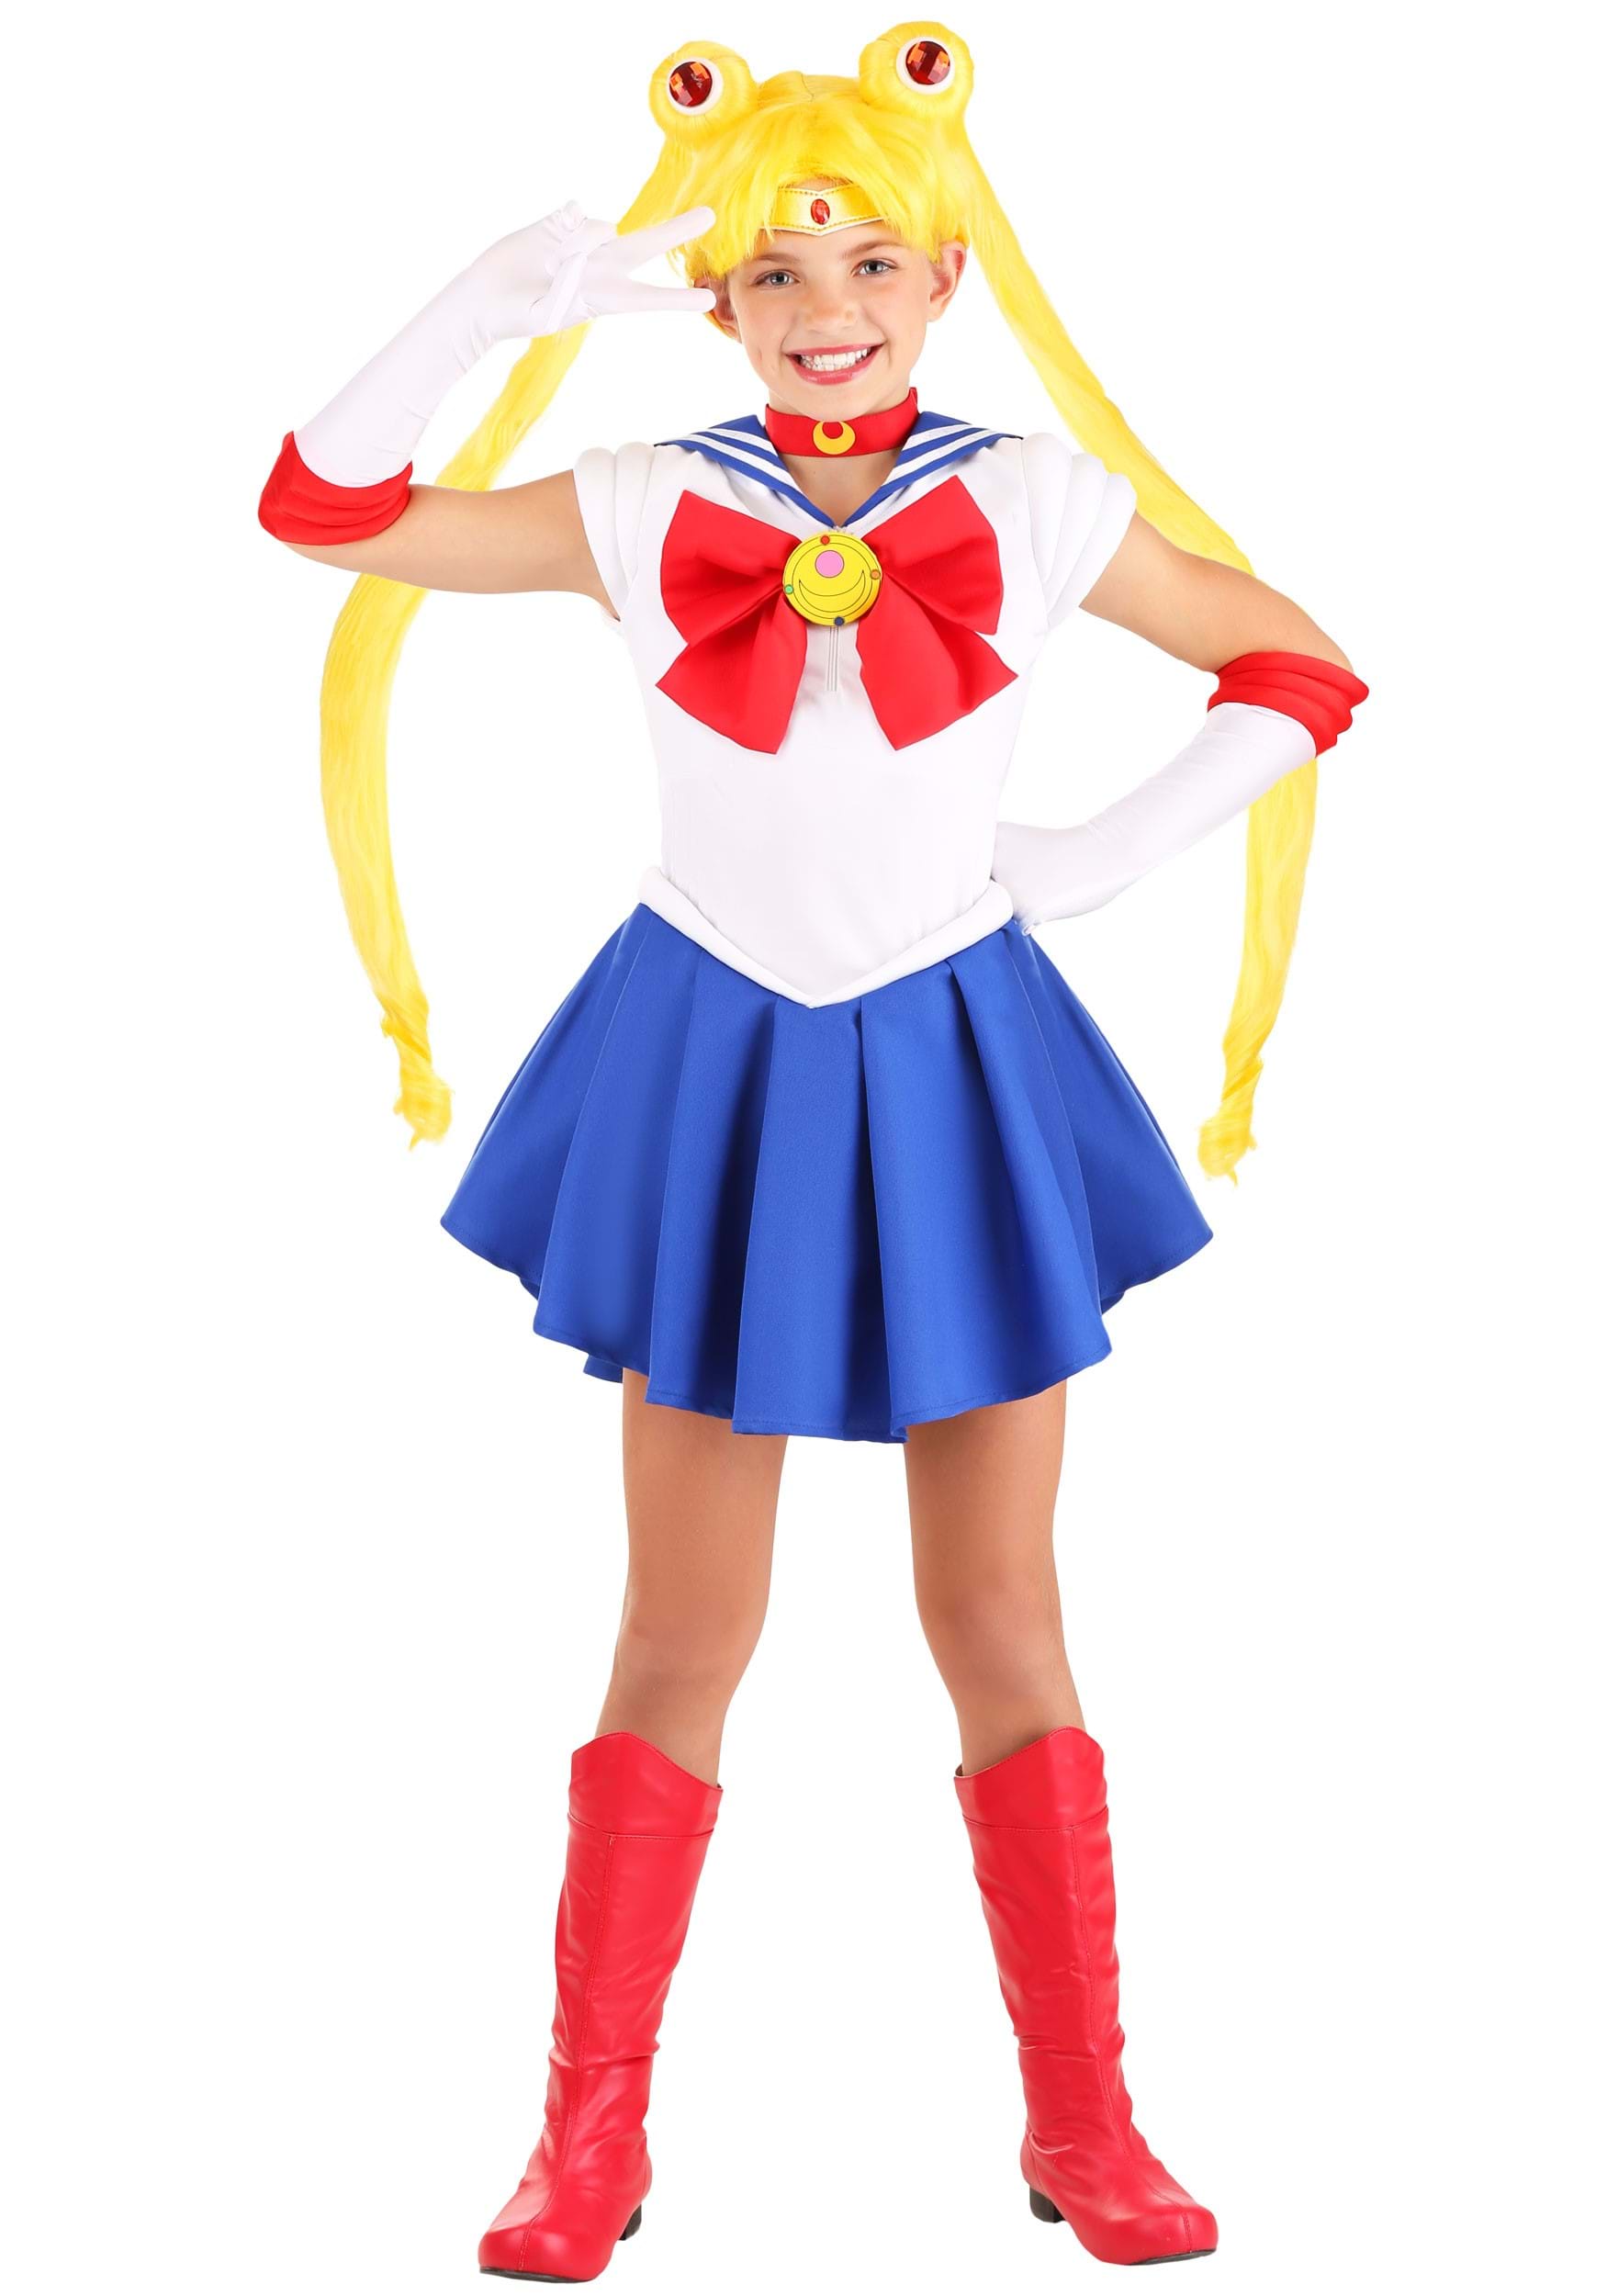 Photos - Fancy Dress FUN Costumes Girl's Sailor Moon Costume Blue/Red/White FUN6293CH